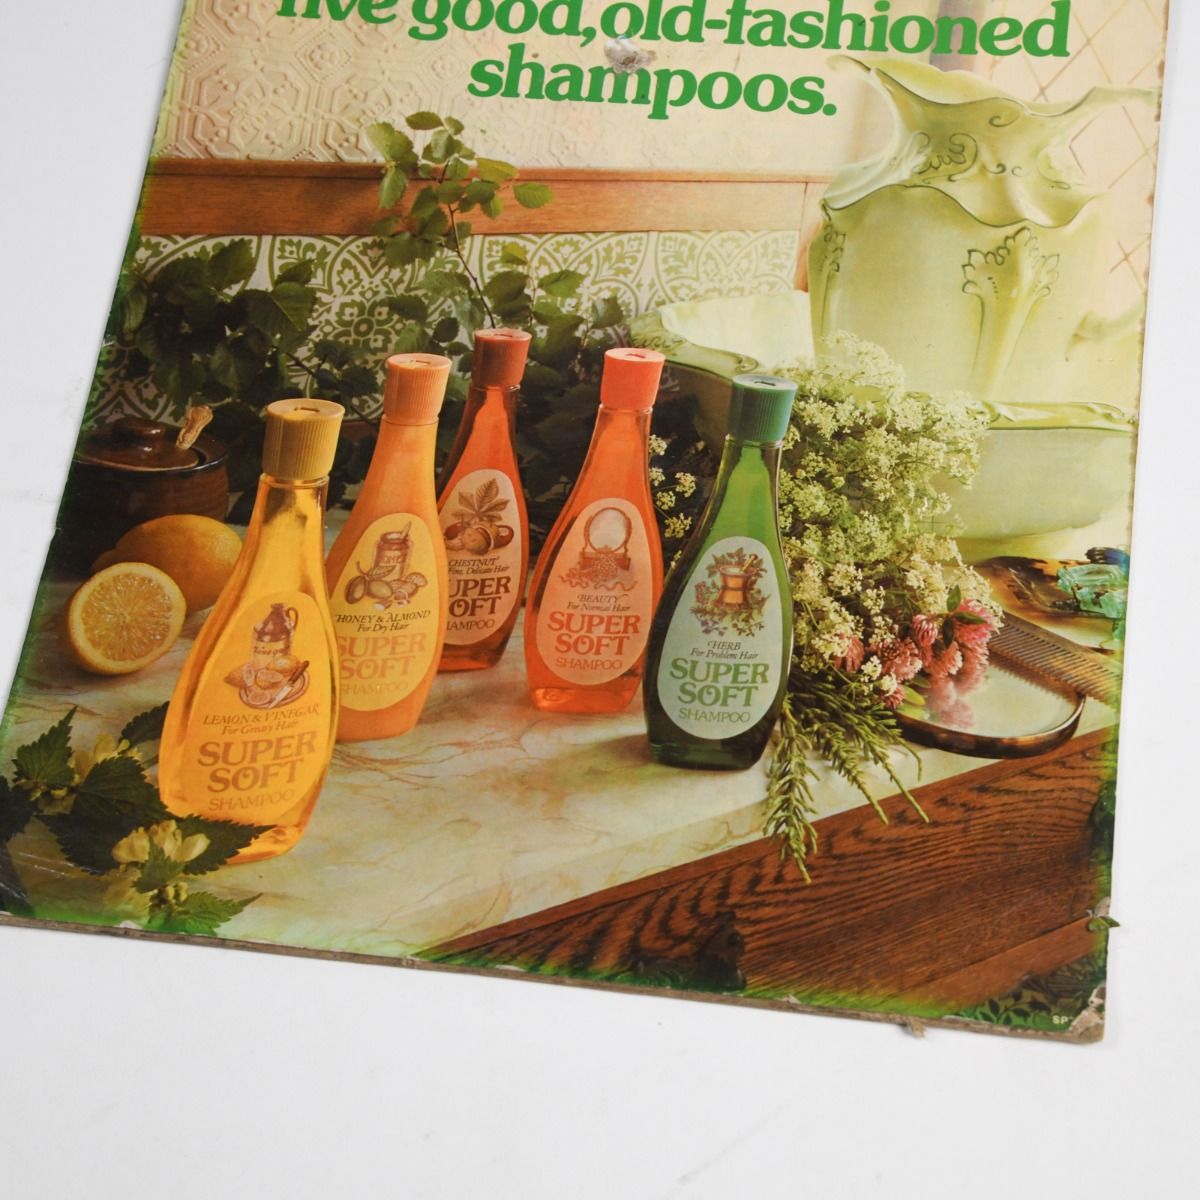 Vintage 1970s Supersoft Shampoo Shop Display Show Card